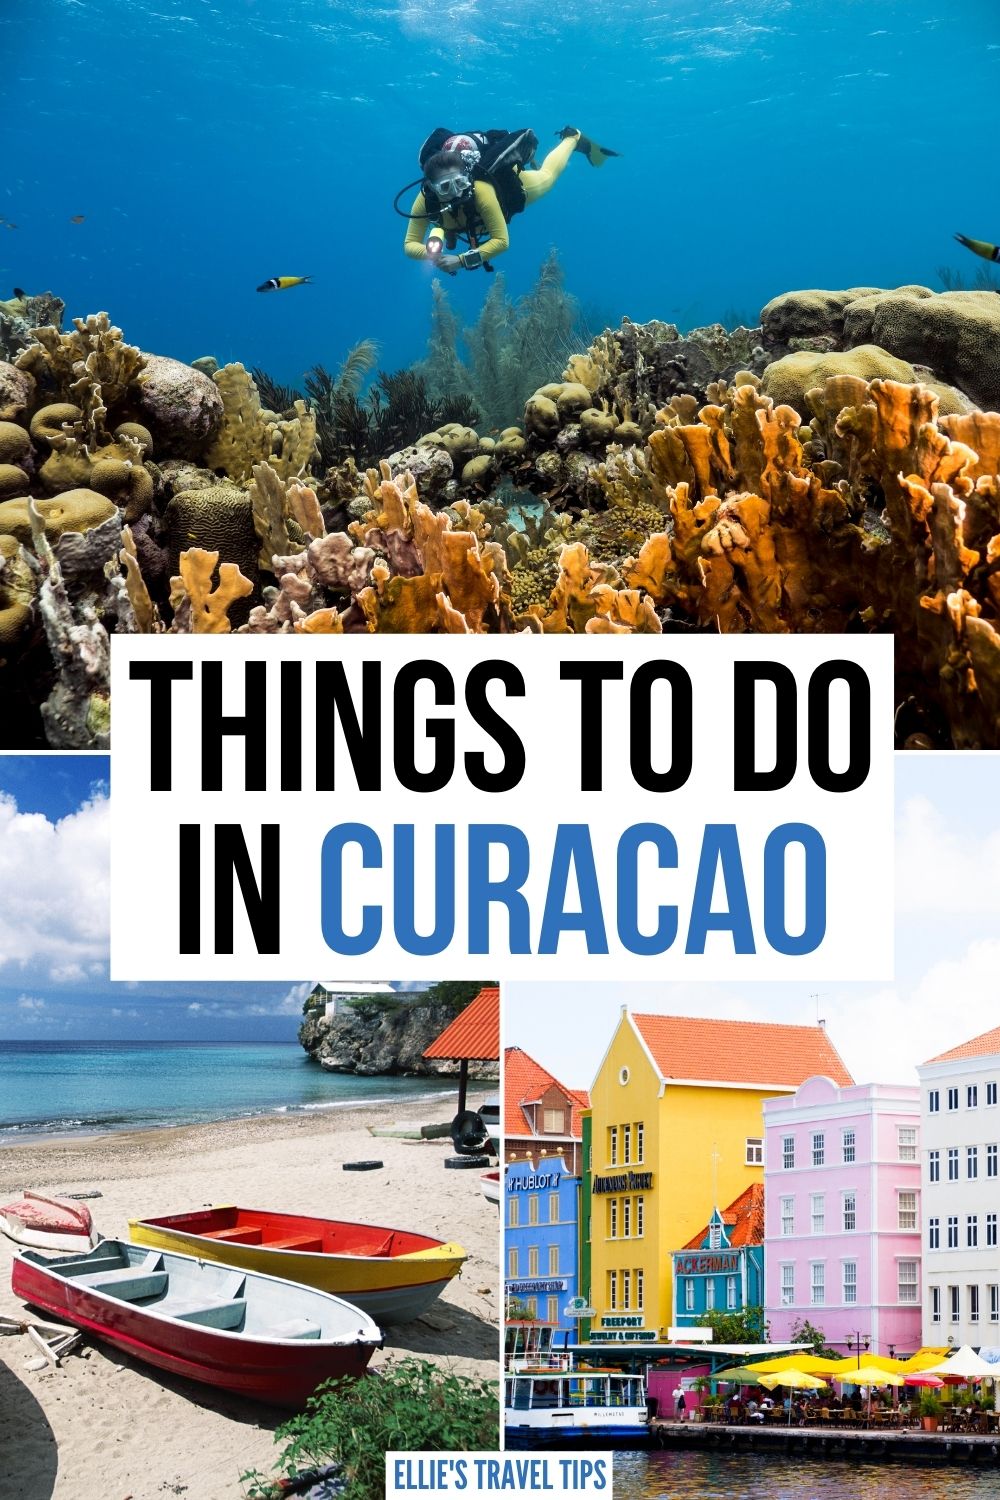 curacao island attractions